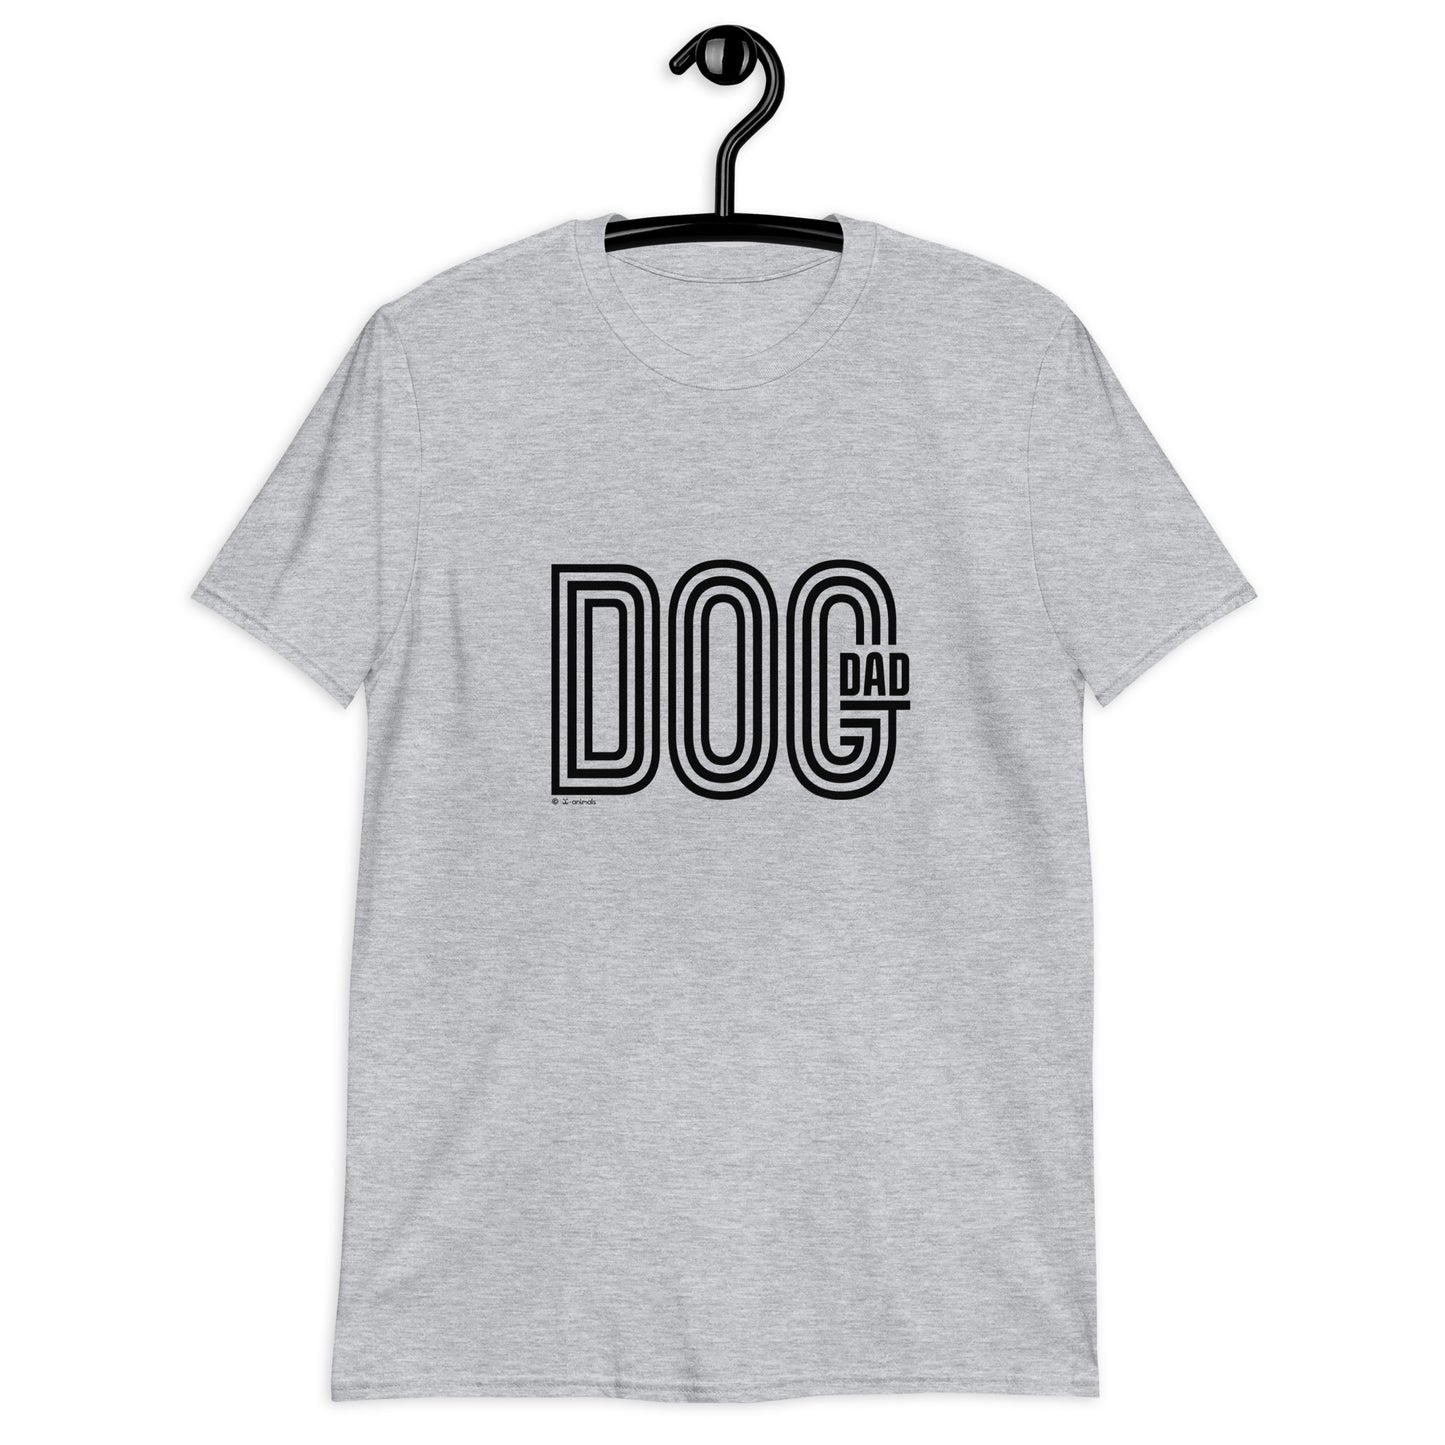 Short-Sleeve Unisex T-Shirt - Dog Dad - Light Colors